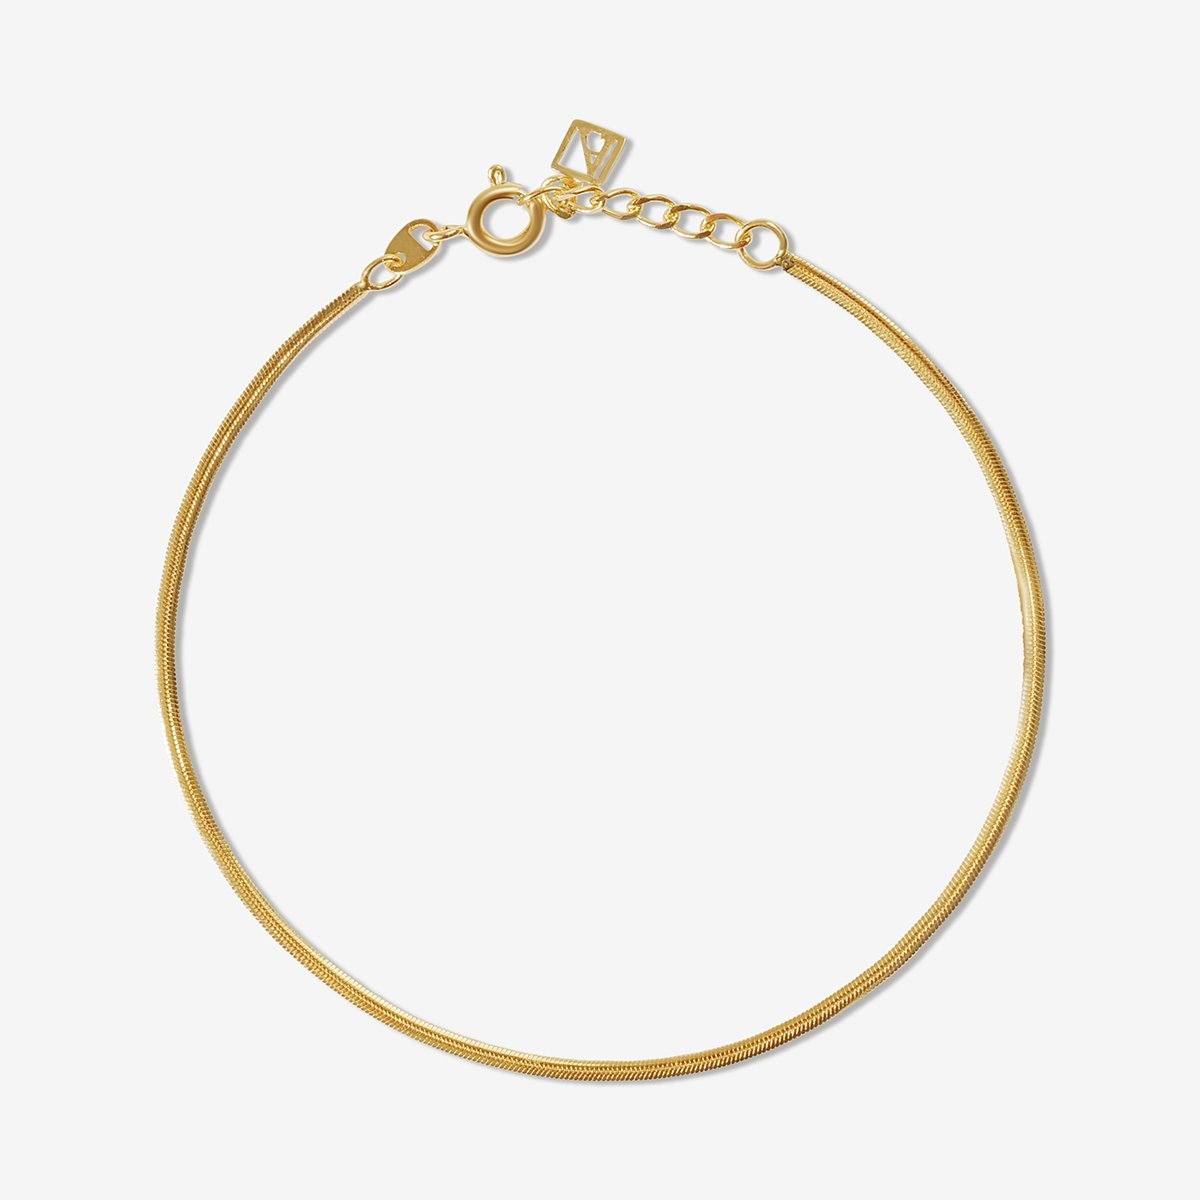 Gold & Silver Plated NeckLace Bracelet Chain Extenders Kit 20 Pcs